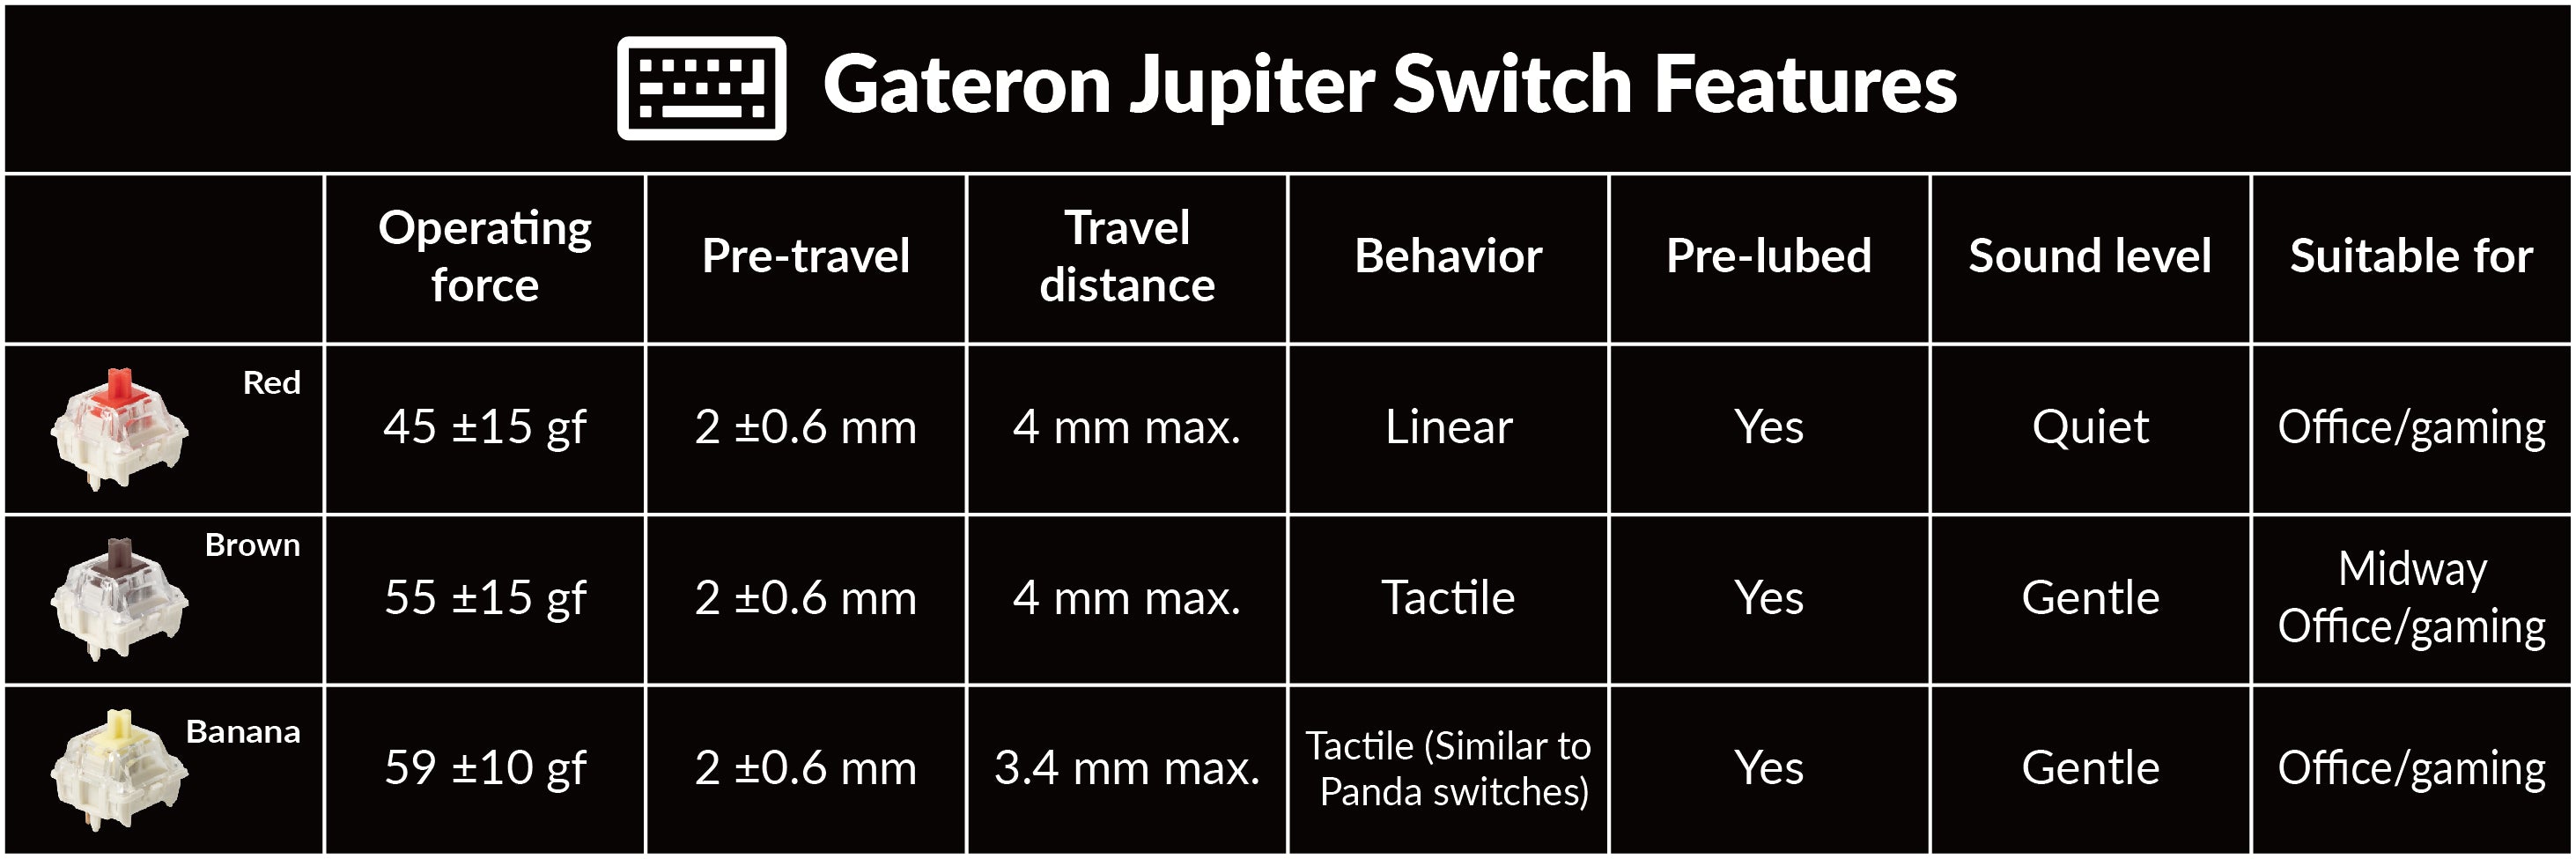 Gateron Jupiter Switch Features of Lemokey L1 QMK/VIA Wireless Custom Gaming Keyboard